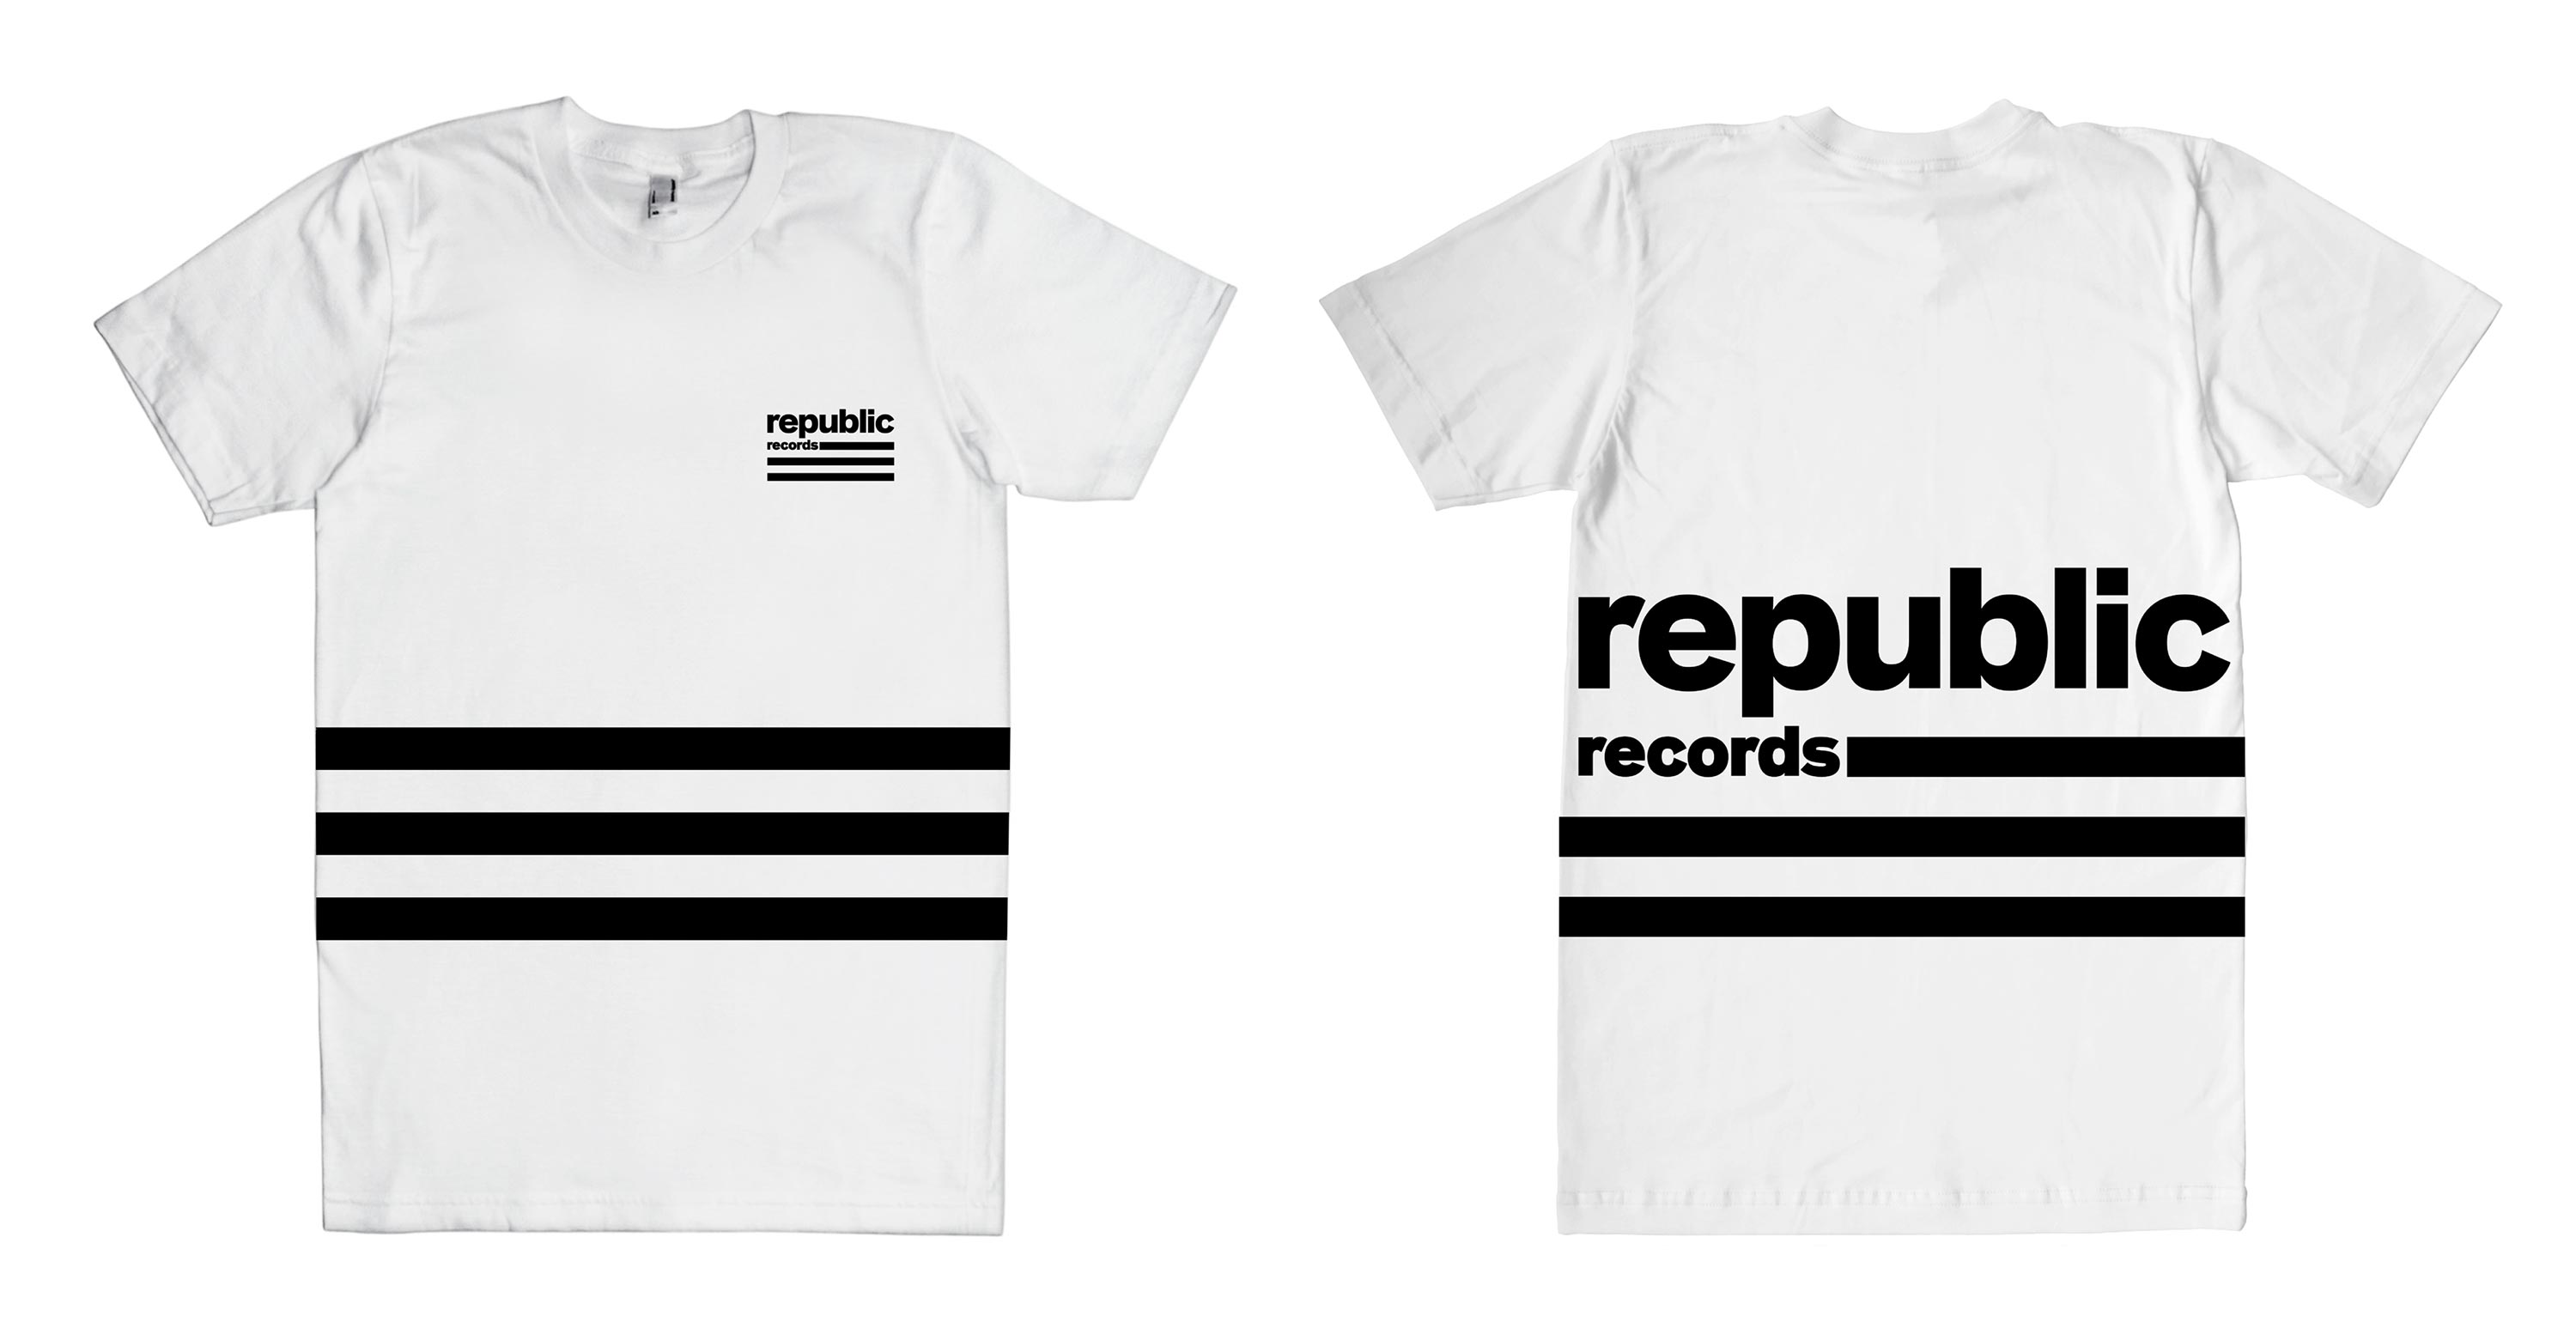 republic records roster